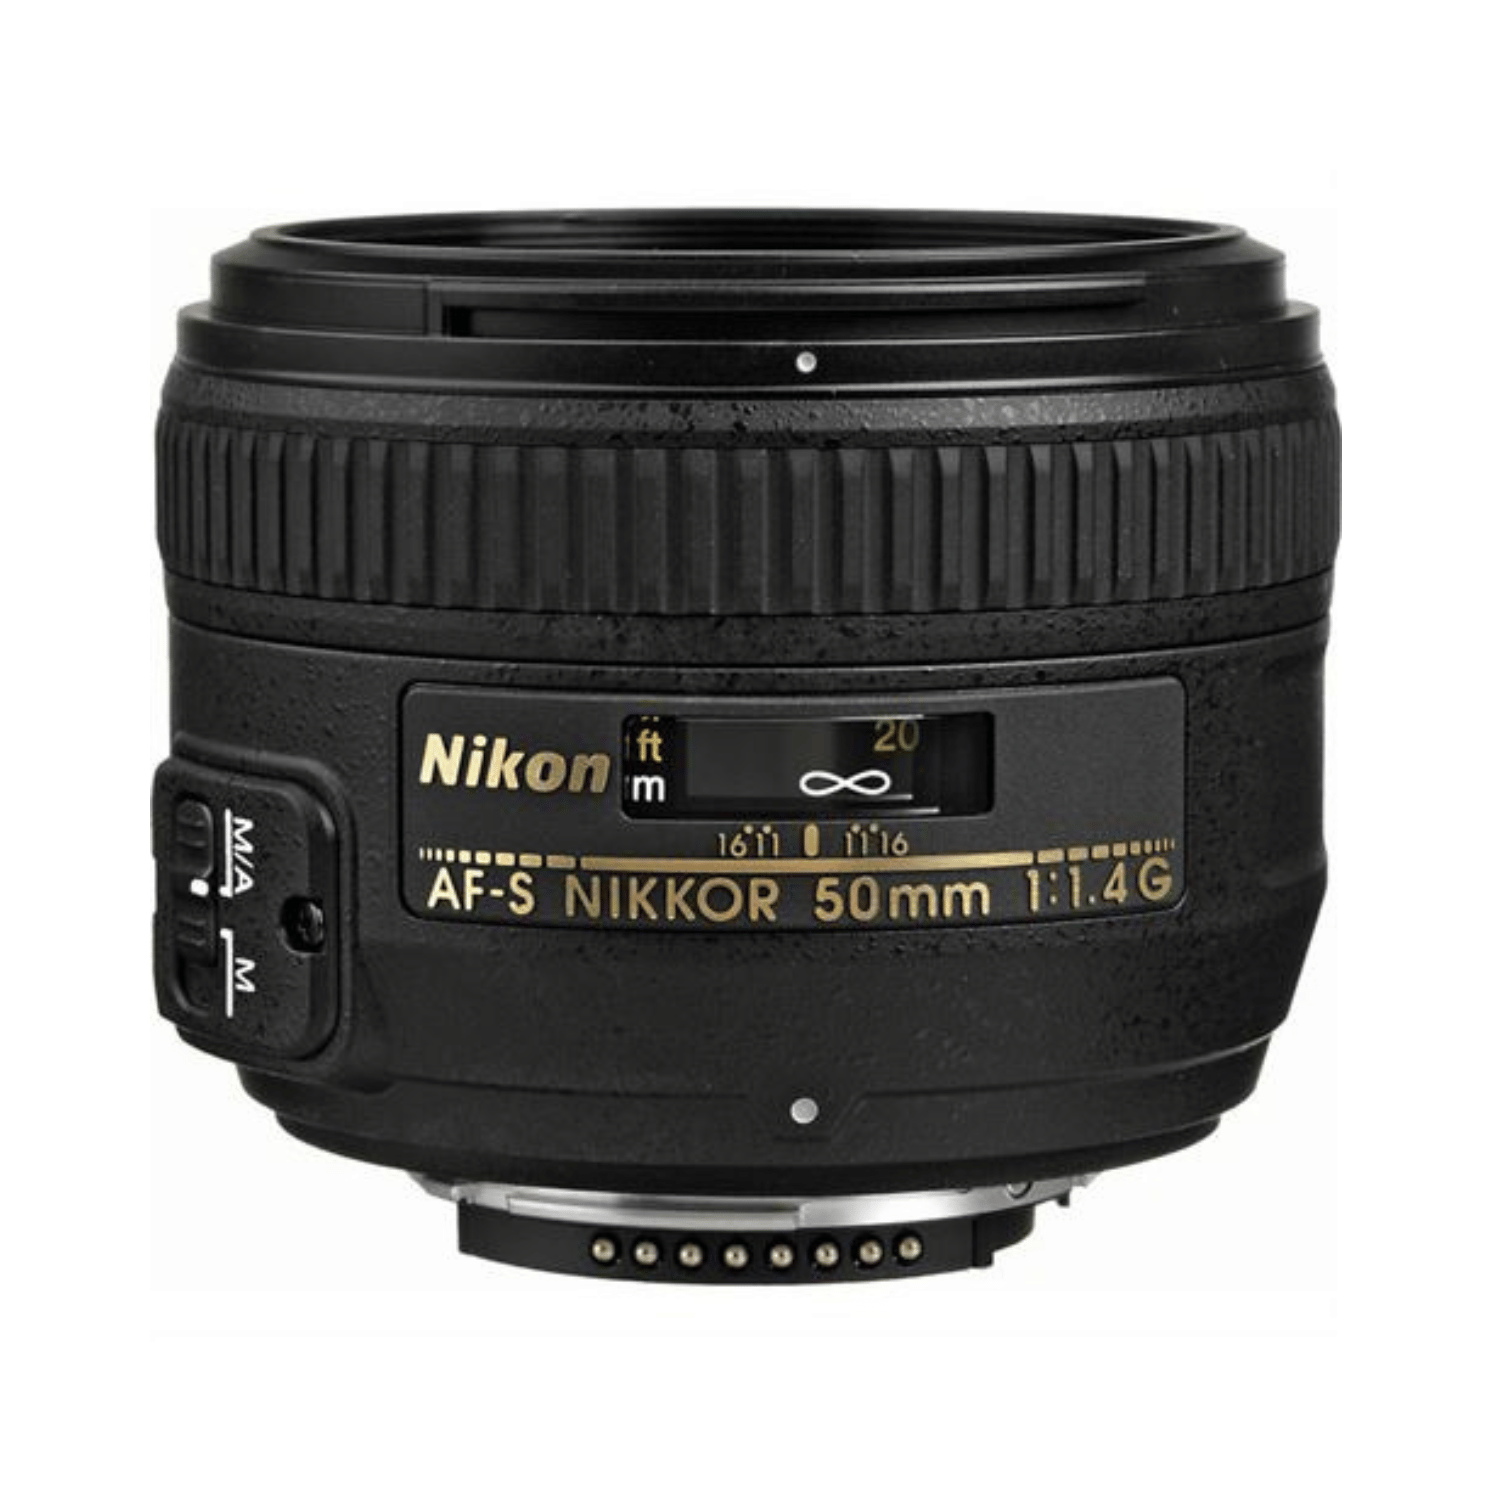 Nikon 50mm F1.4G AF-S - Garanzia 4 anni Nital  - Cine sud è da 47 anni sul mercato! 311012